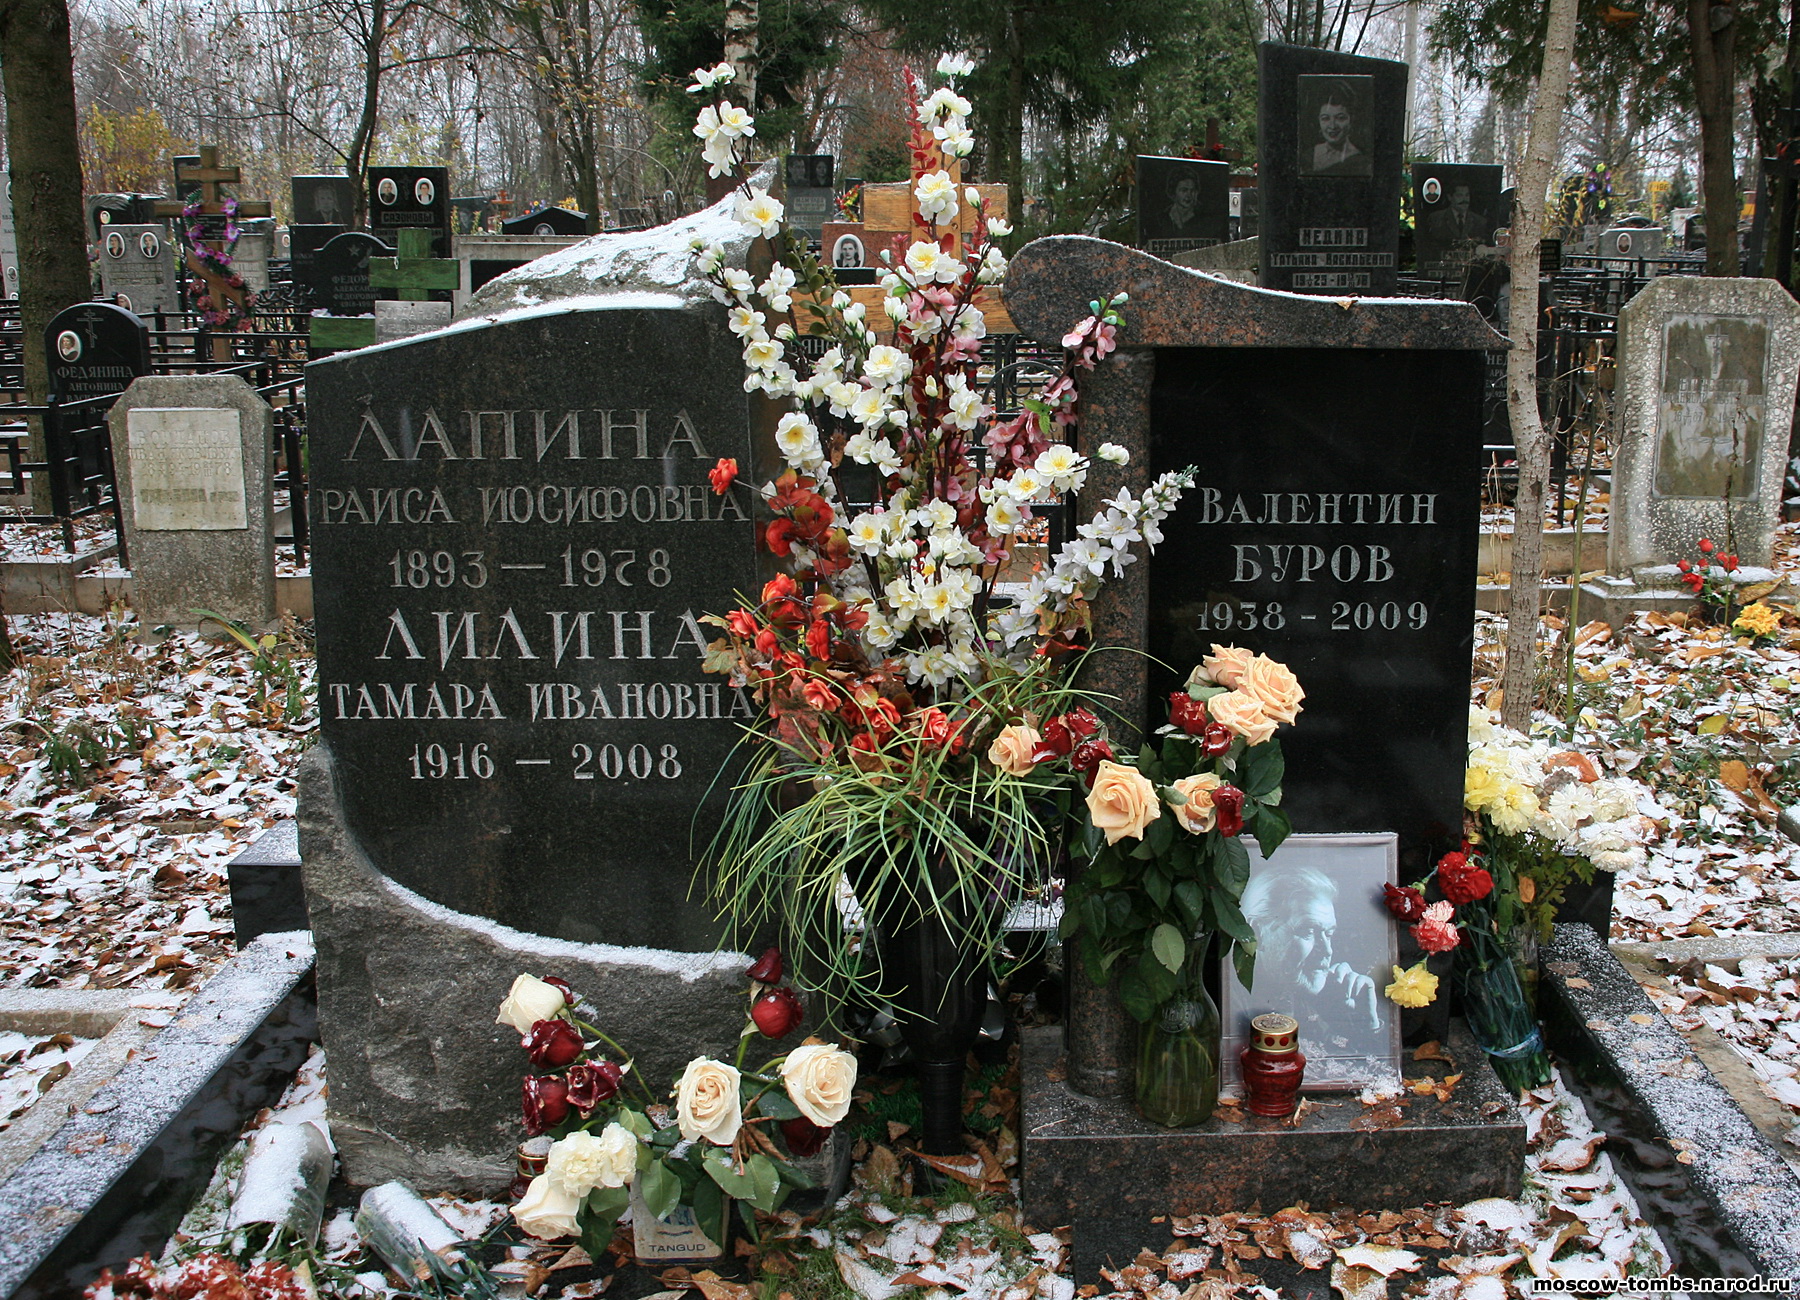 Памятник Валентину Бурову